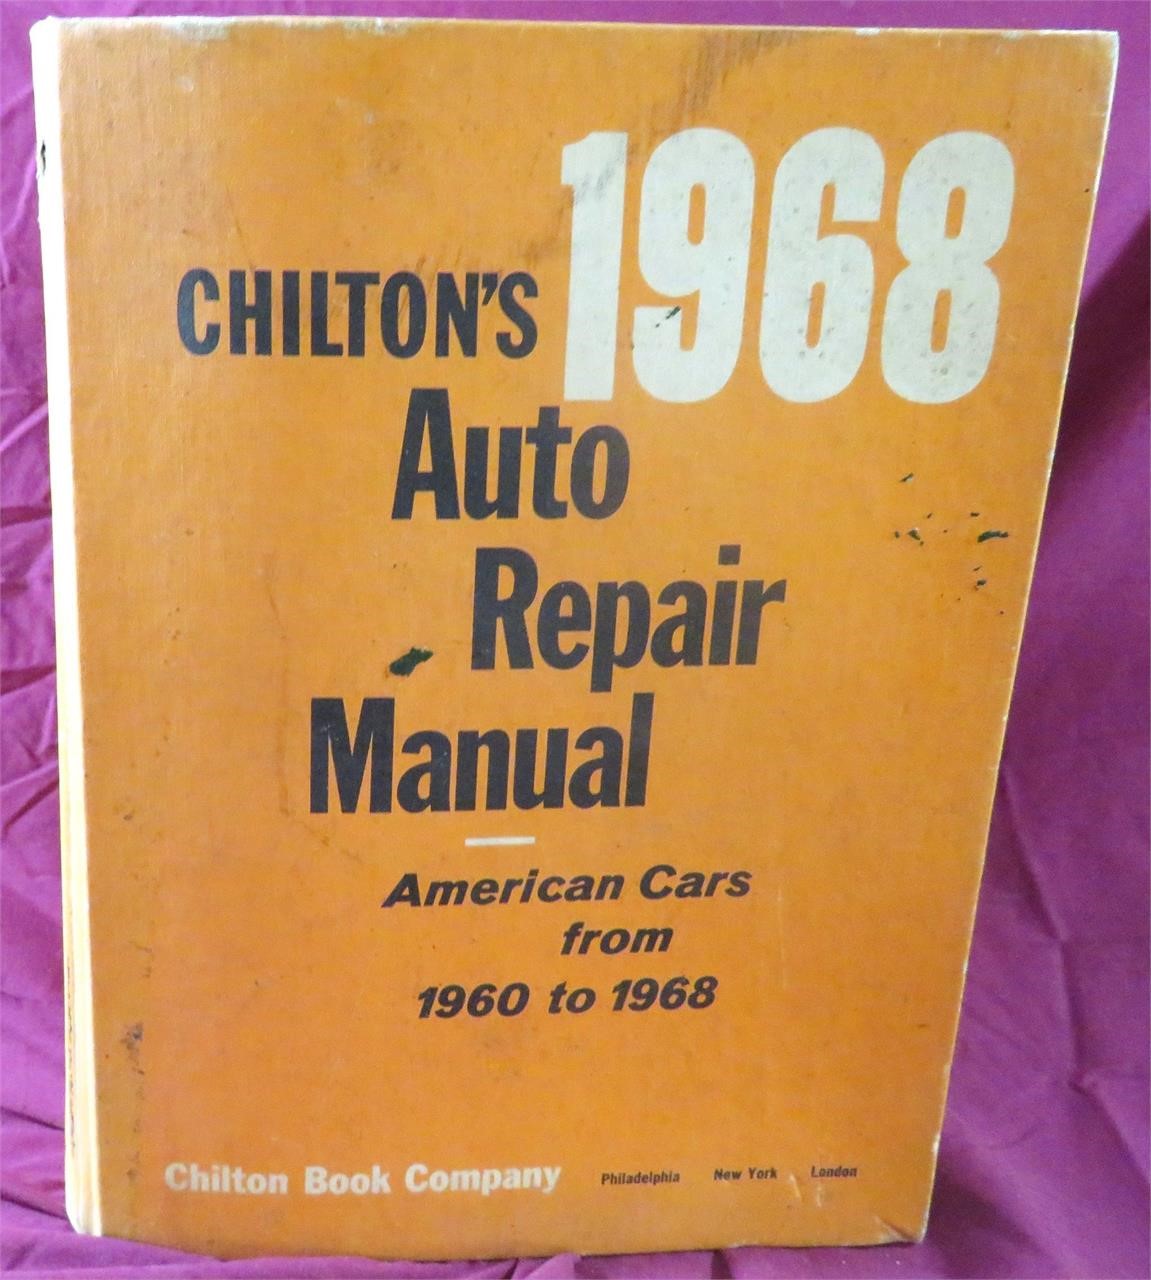 VINTAGE CHILTONS AUTO REPAIR MANUAL 1960-1968